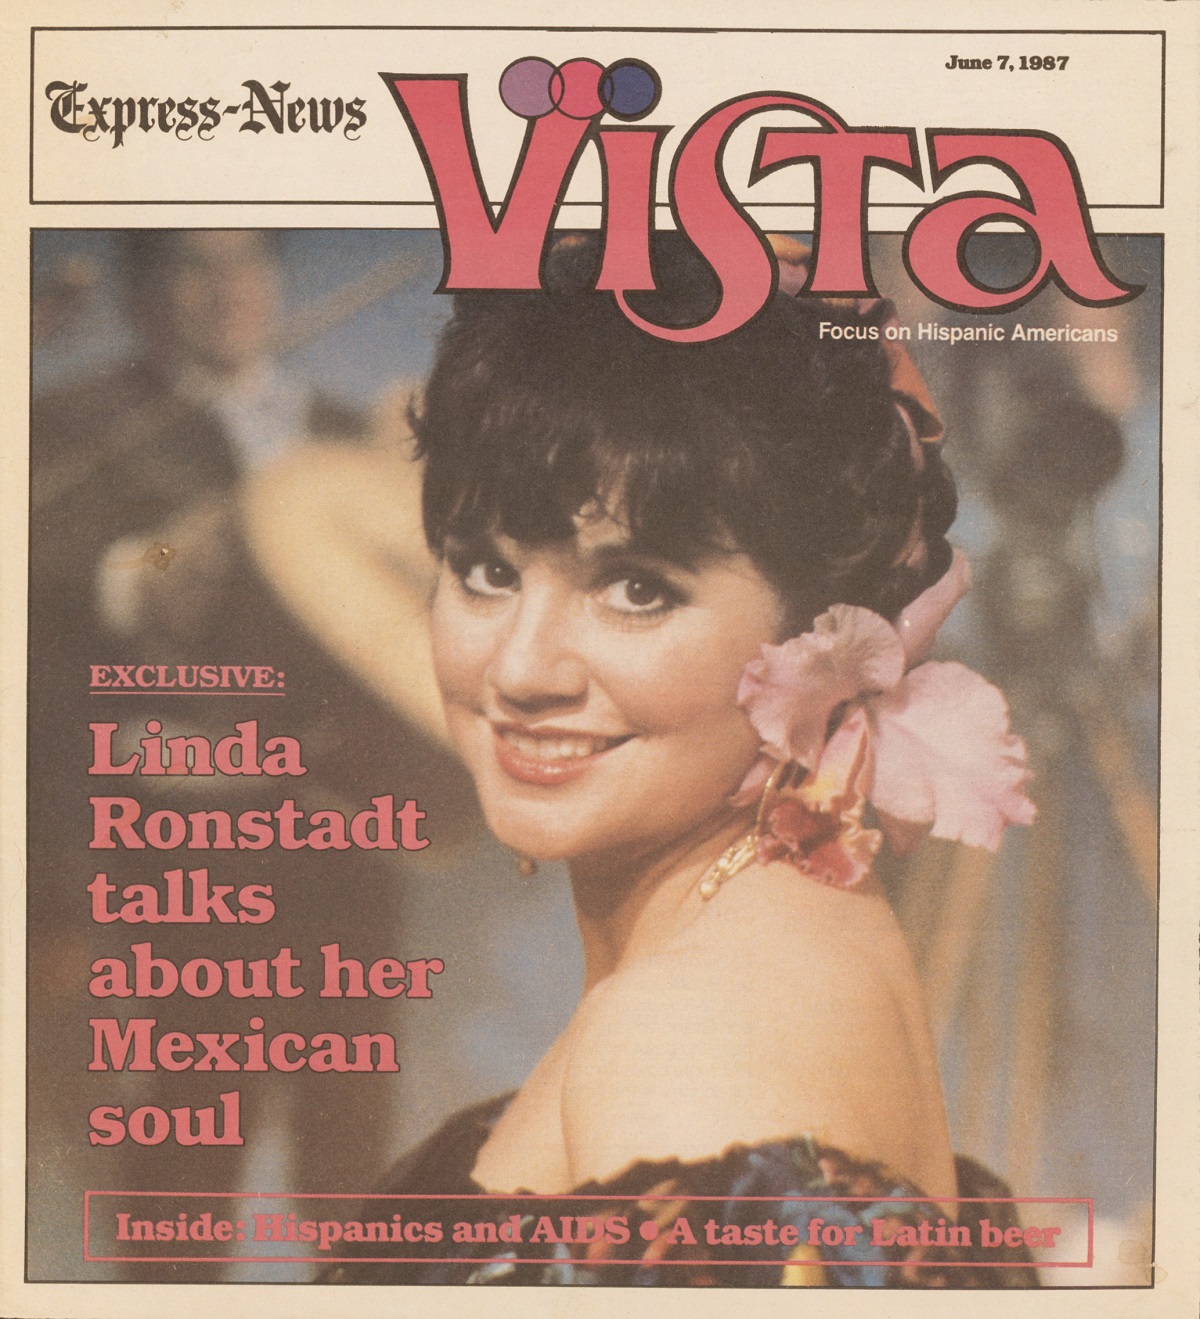 Linda Ronstadt - Vista Magazine, June 7, 1987.